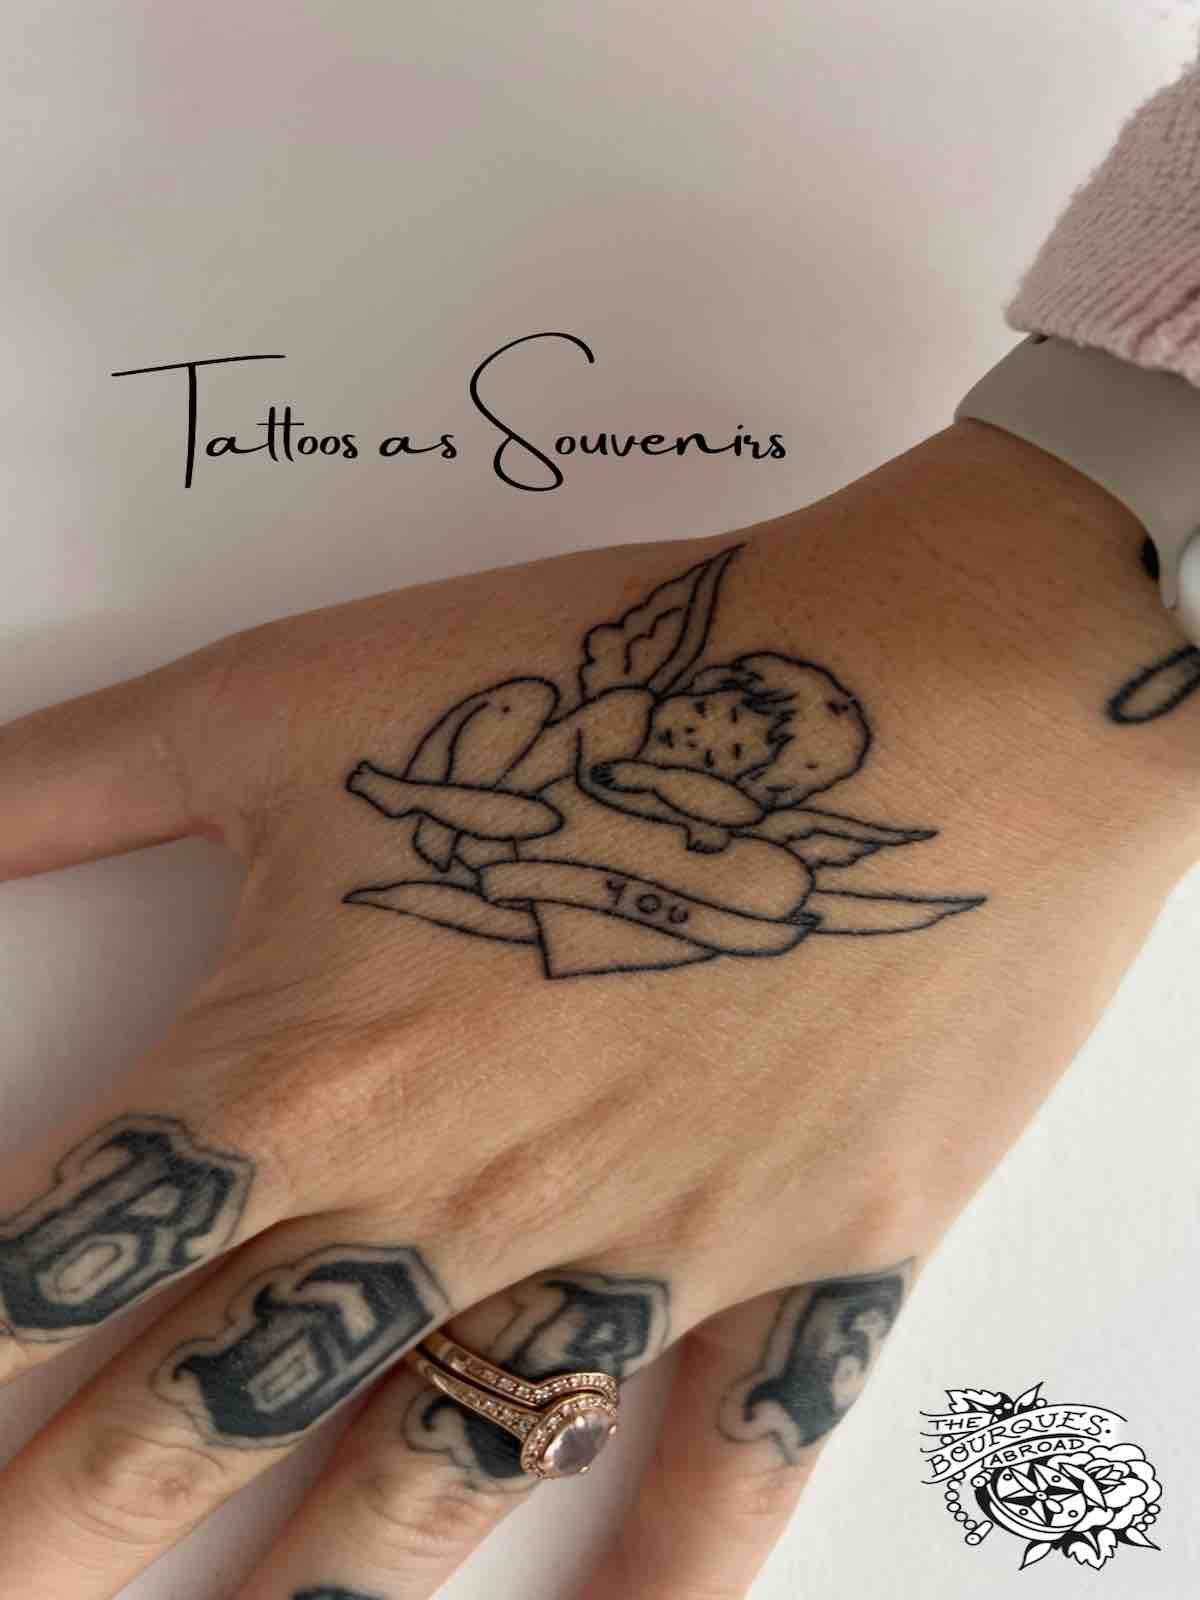 tattoos as souvenirs